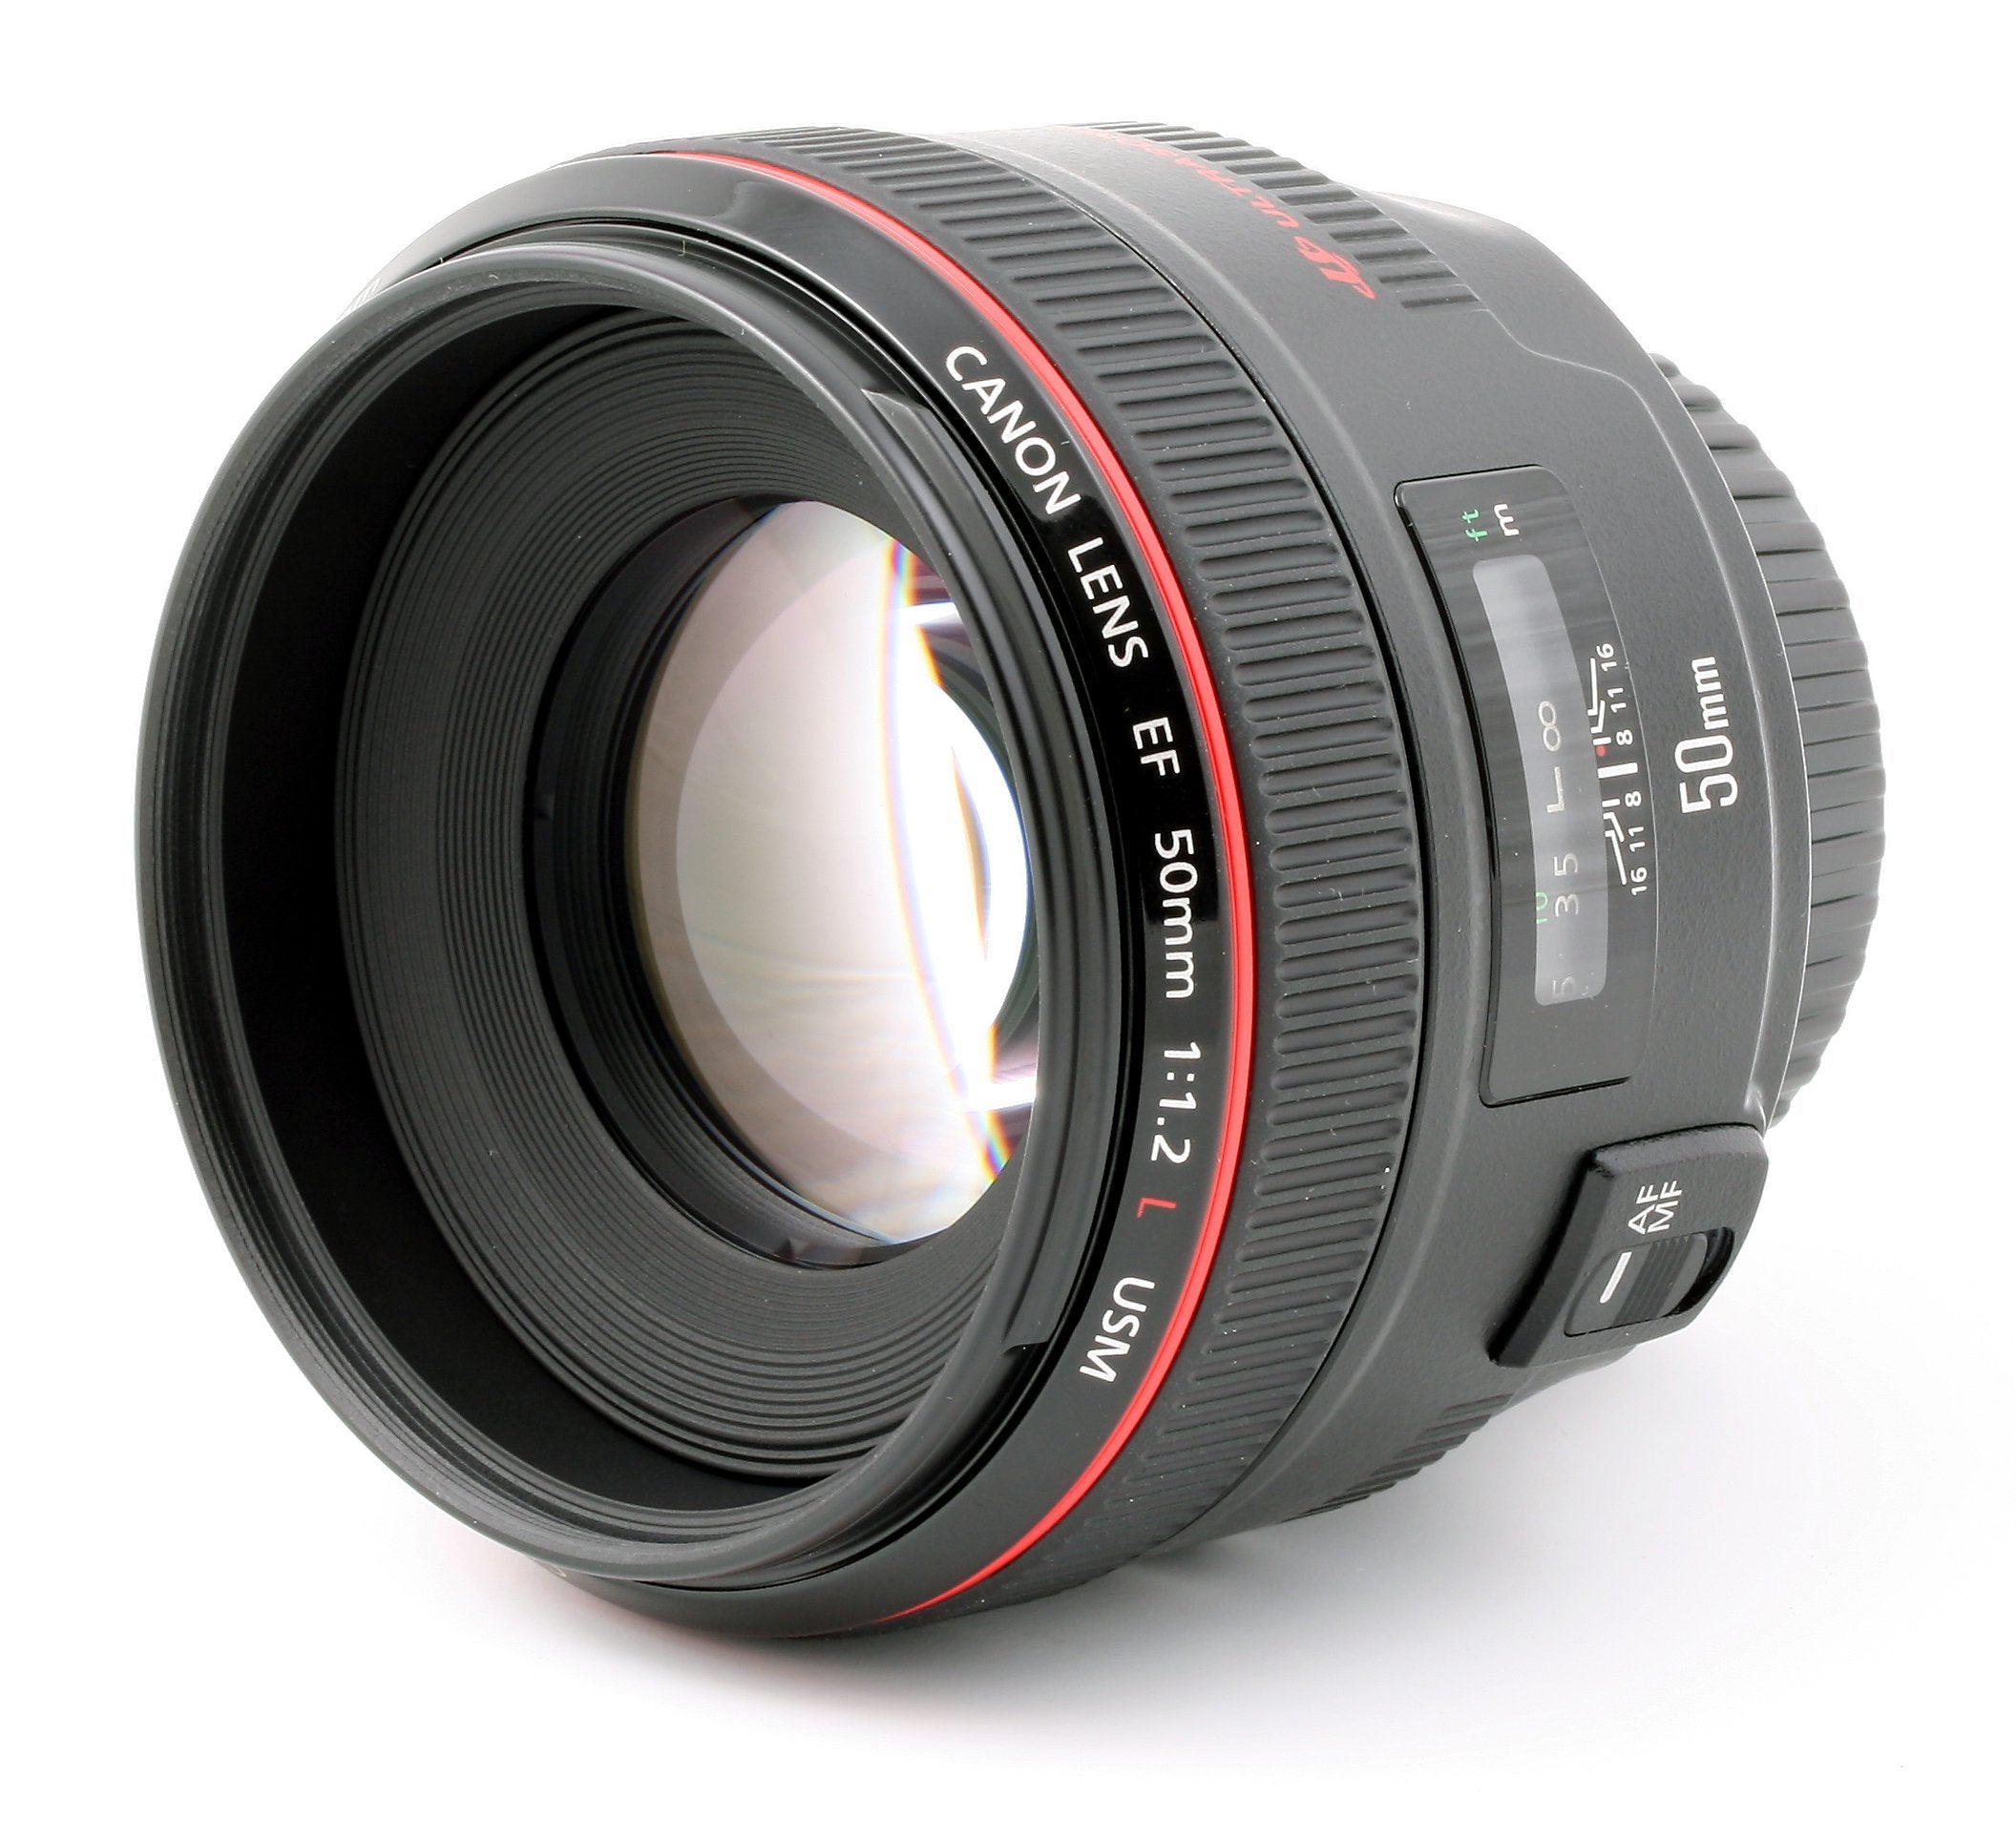 Canon EF 50mm f/1.2 L USM Lens for Canon Digital SLR Cameras - International Model